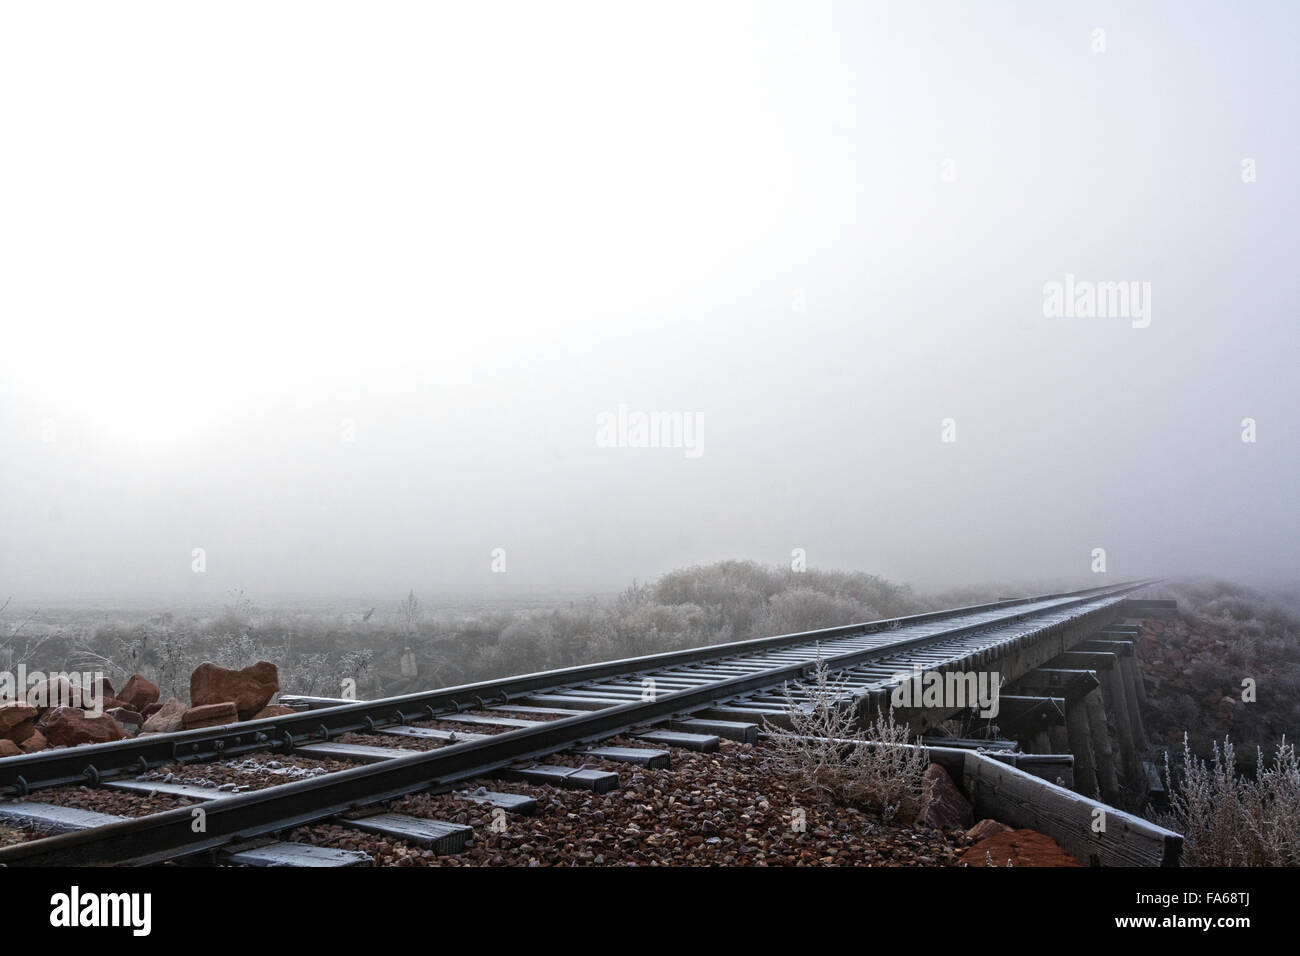 Railway tracks disappearing into fog, Colorado, United States Stock Photo